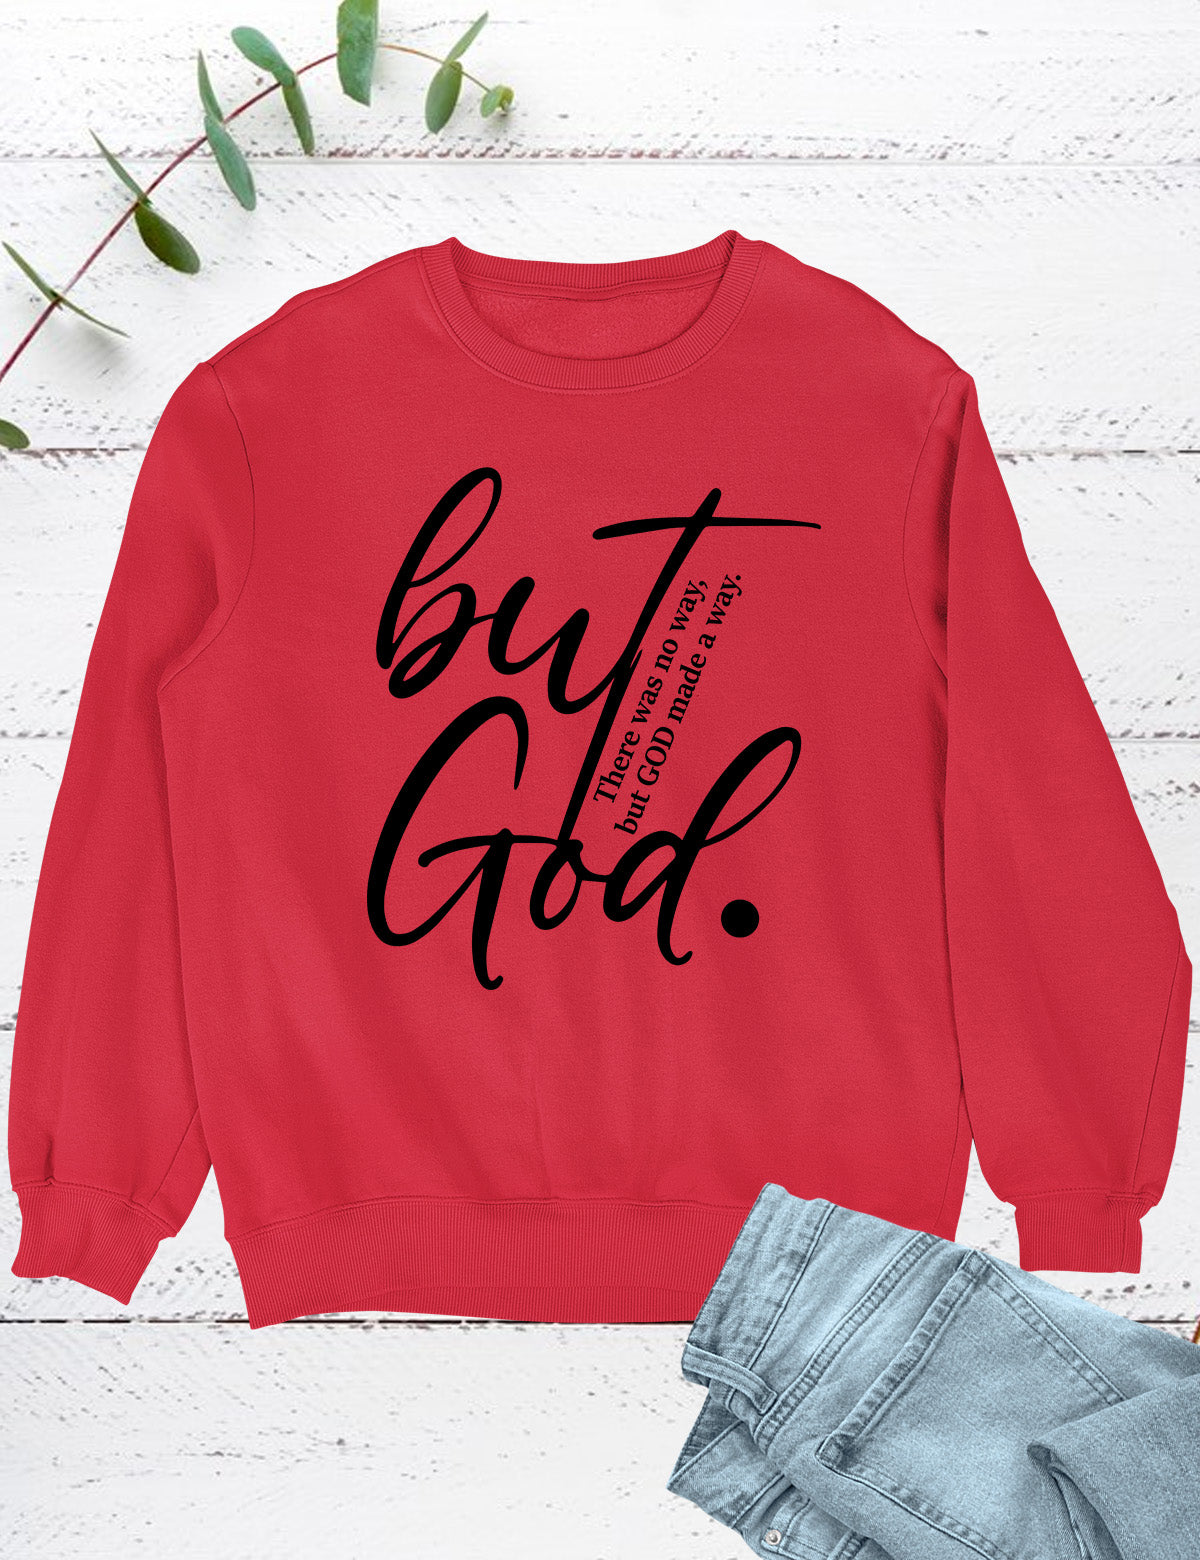 But God Bible Verse Sweatshirts